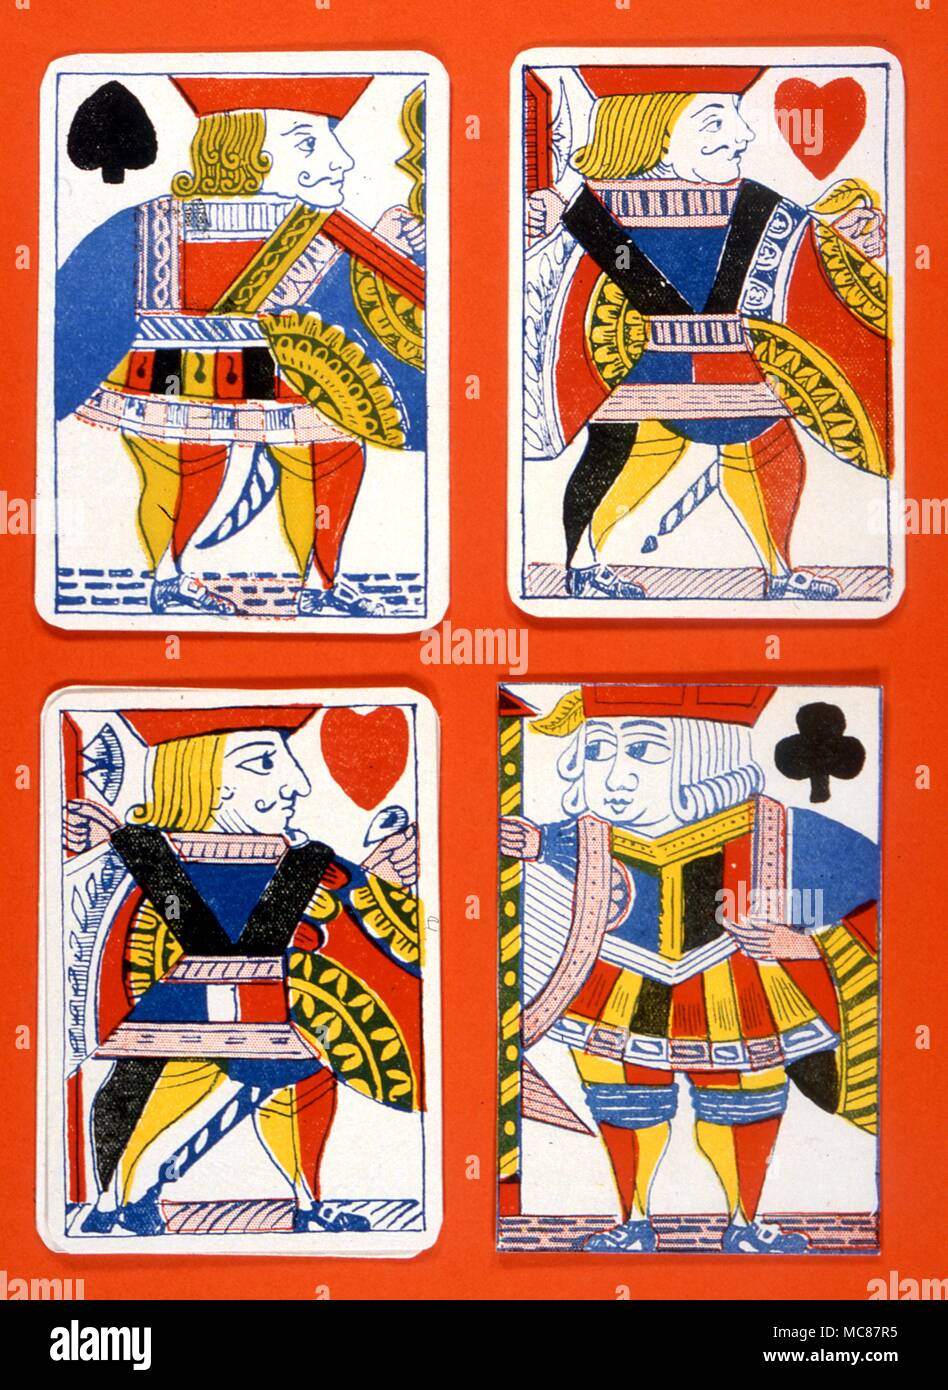 Cartomanzia carte da gioco inglese giocando a carte del secolo eighteeth  Foto stock - Alamy